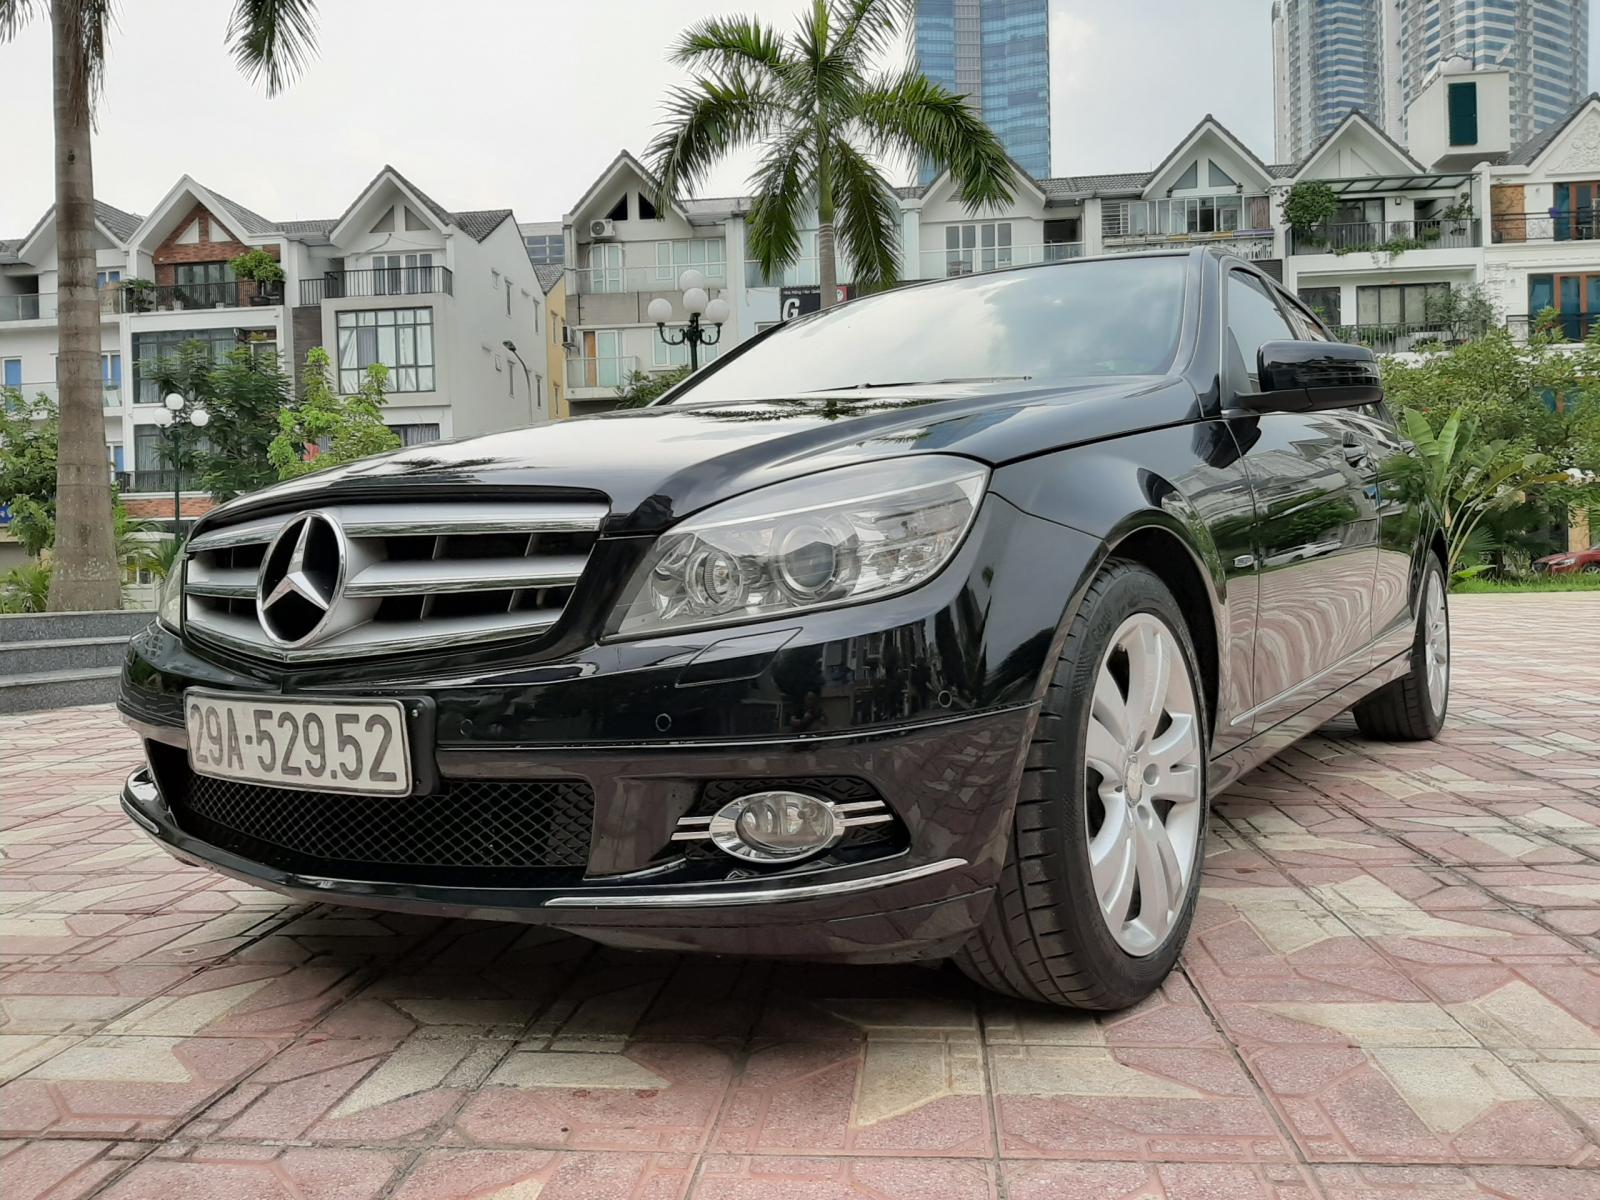 Bán xe ô tô MercedesBenz C200 2010 giá 386 triệu  2163059